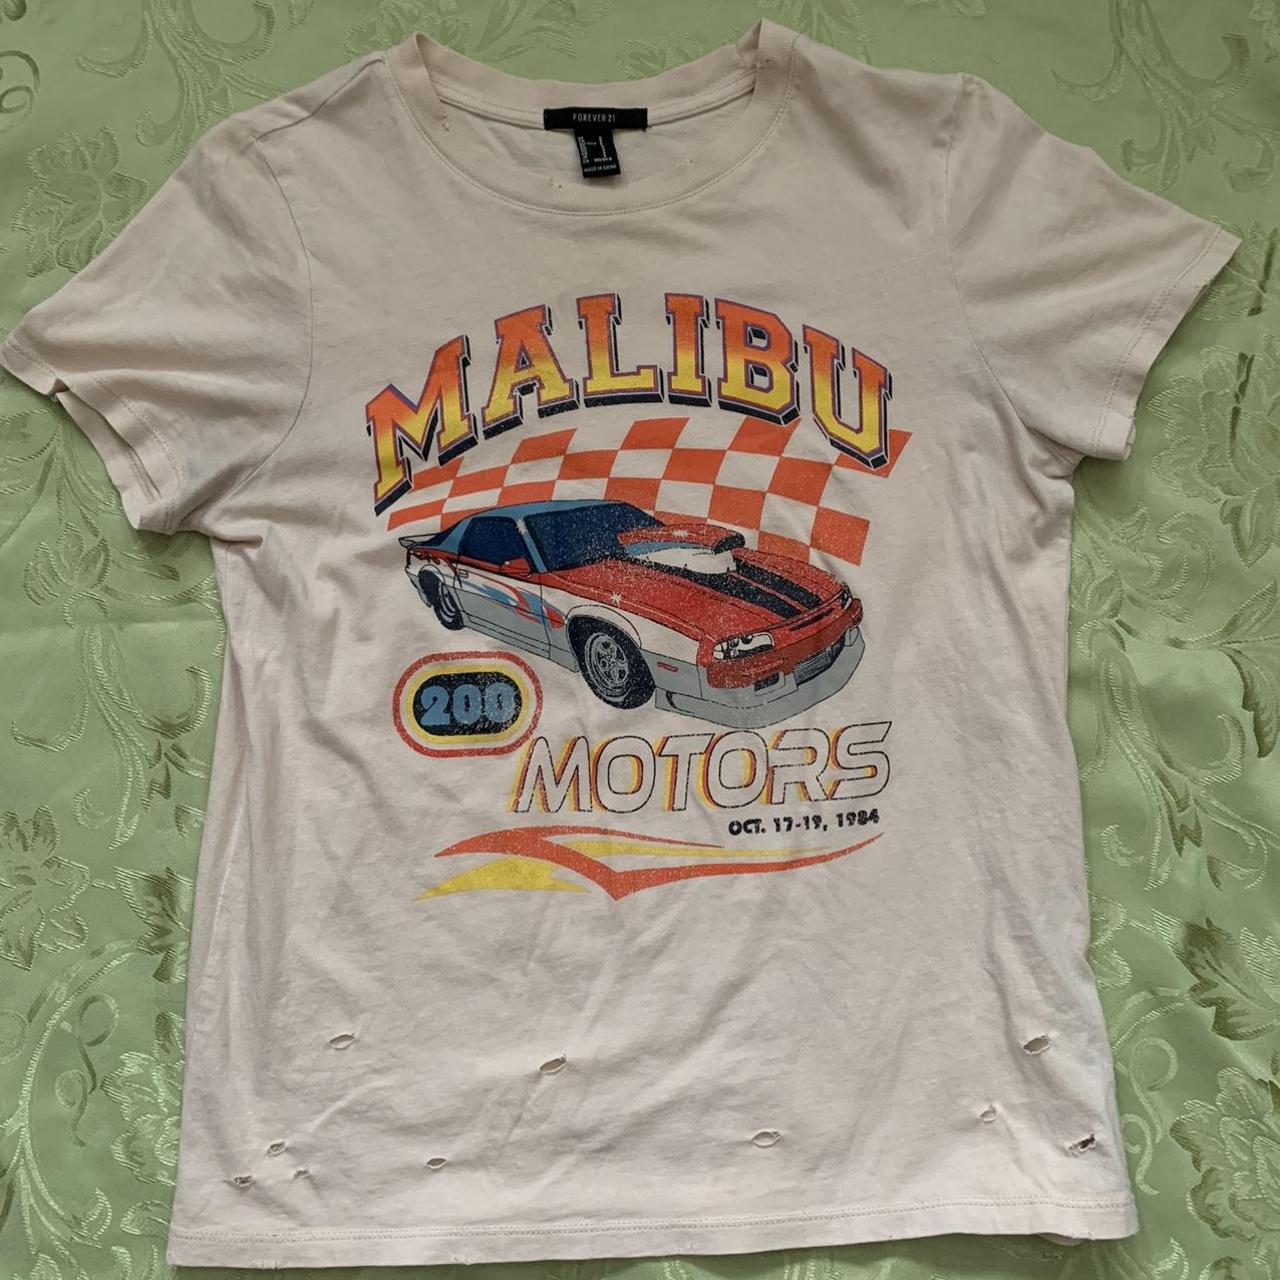 Mens T-shirt Vintage Racing Cars Graphic Tee